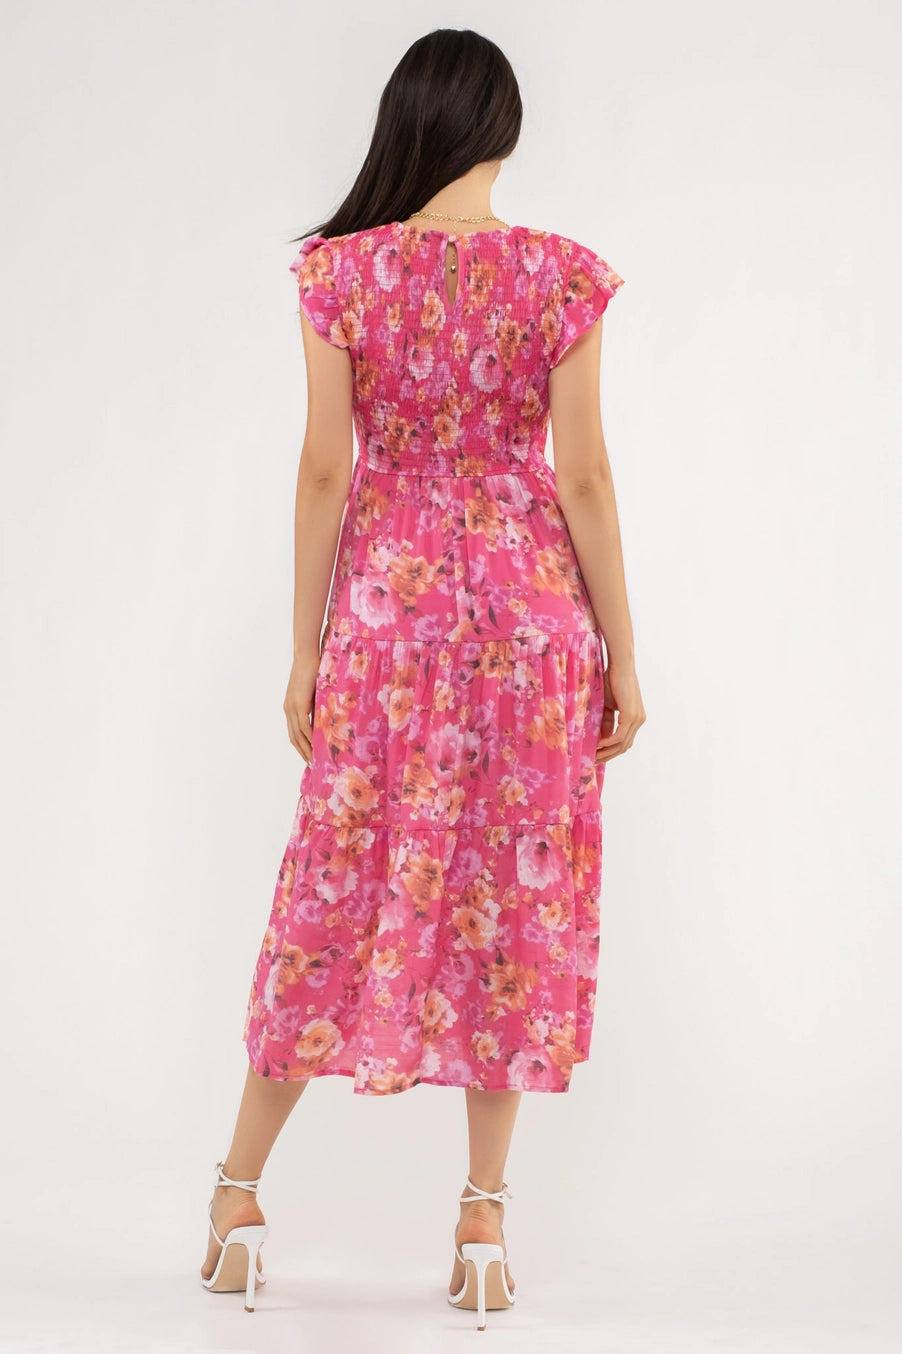 Jessica Fuchsia Print Dress - KC Outfitter